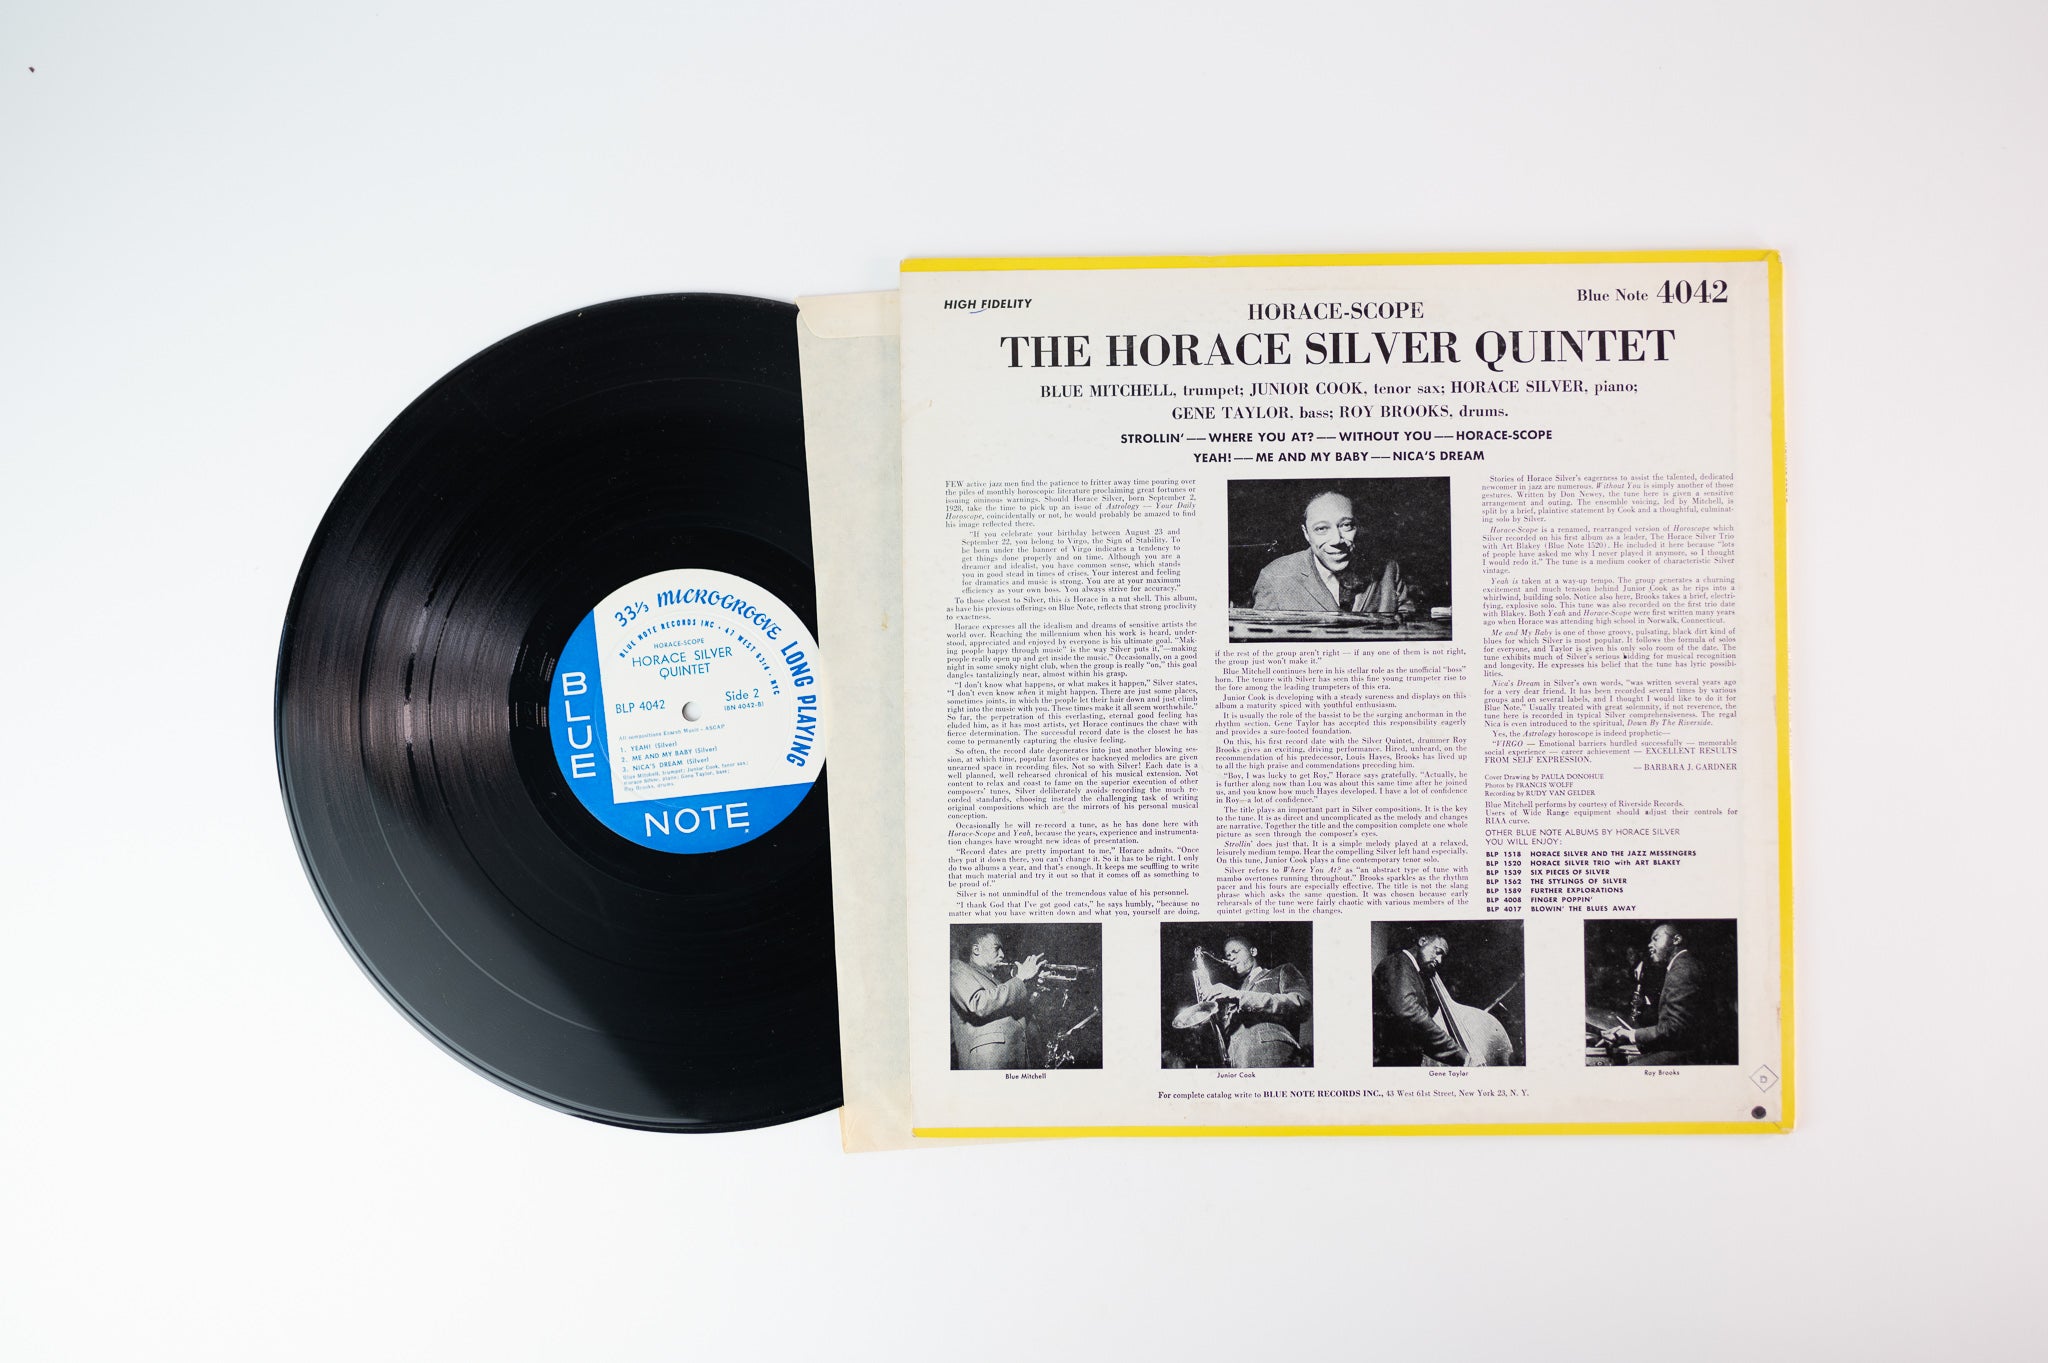 The Horace Silver Quintet - Horace-Scope on Blue Note - BLP 4042